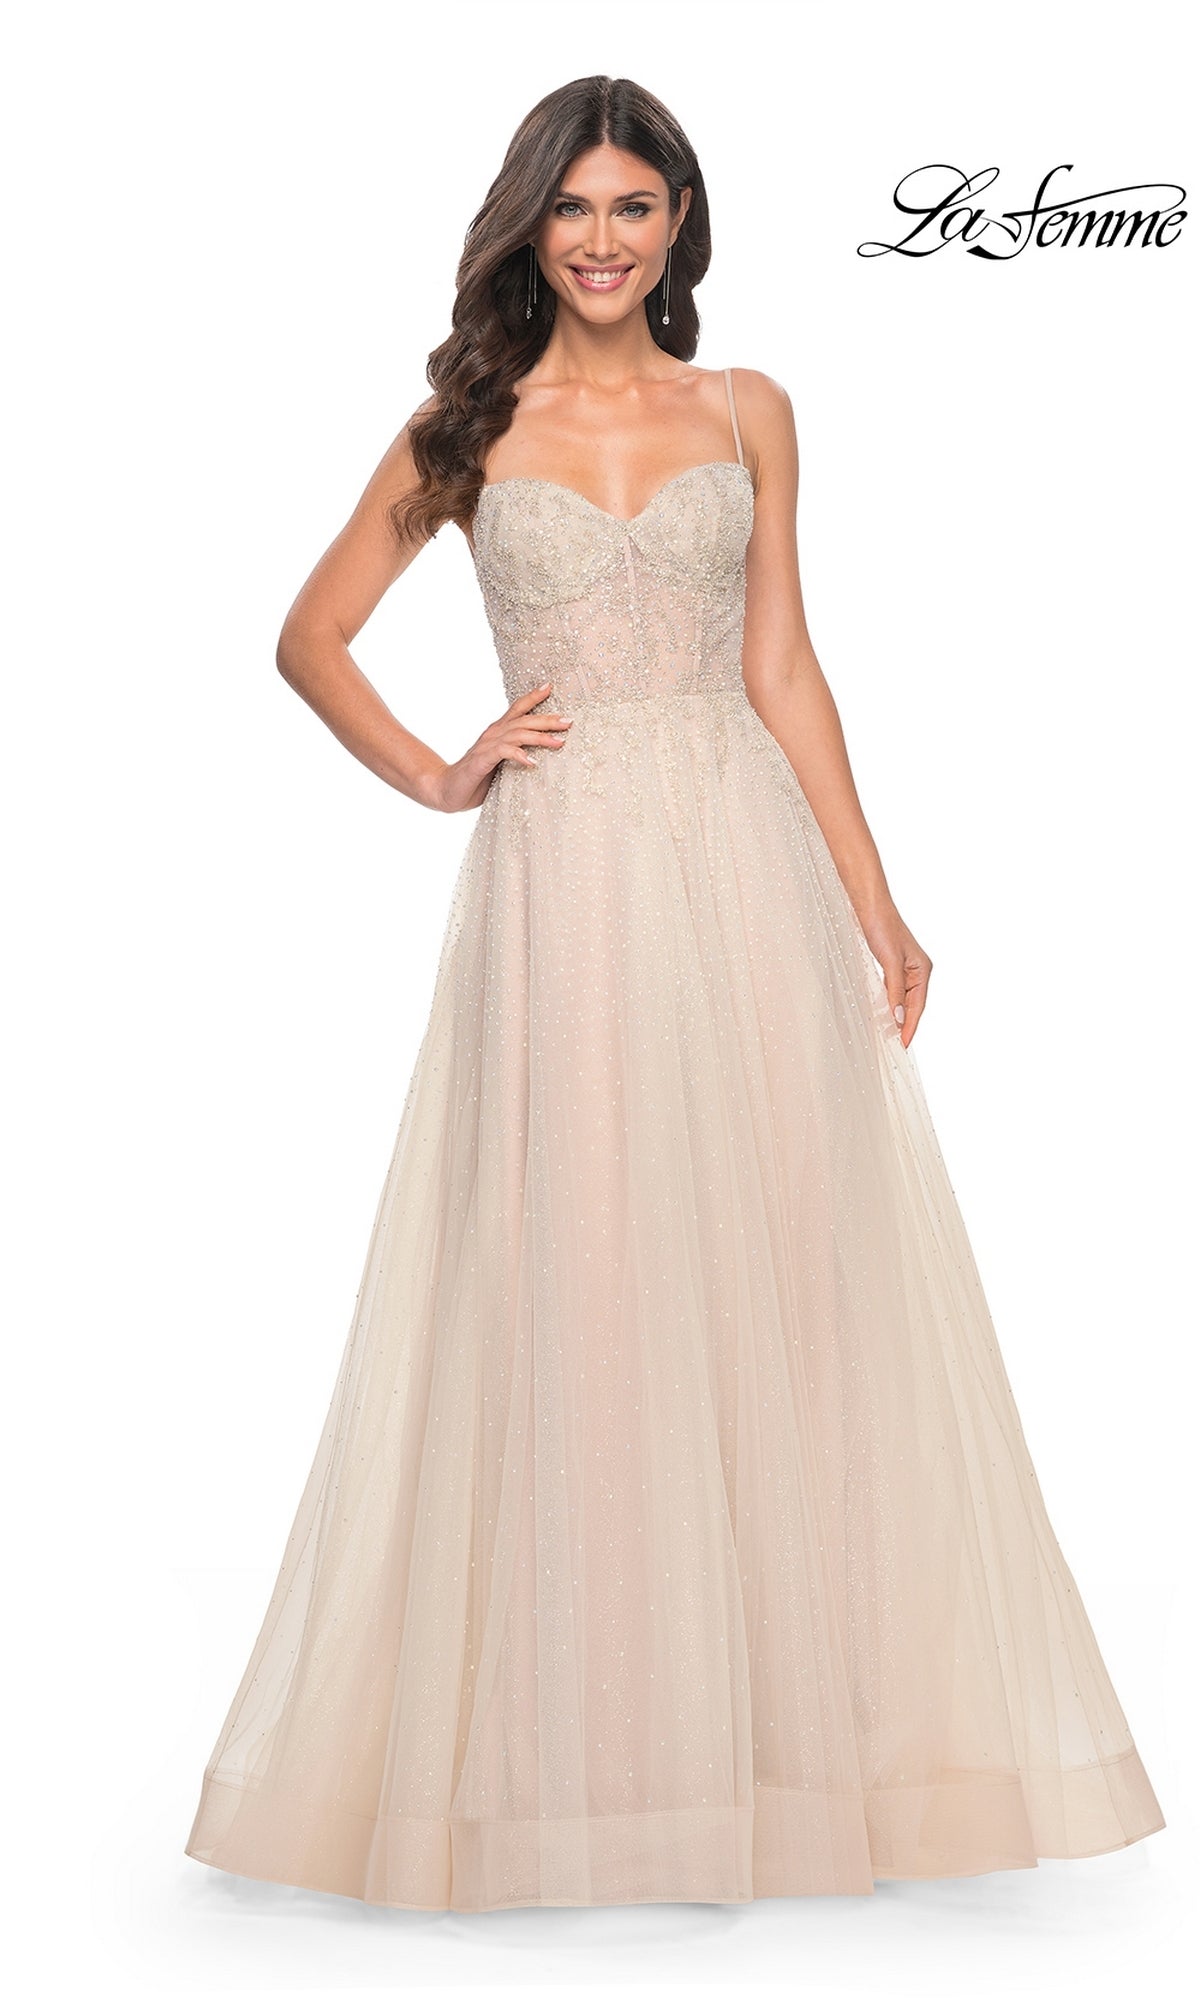  La Femme 32271 Formal Prom Dress